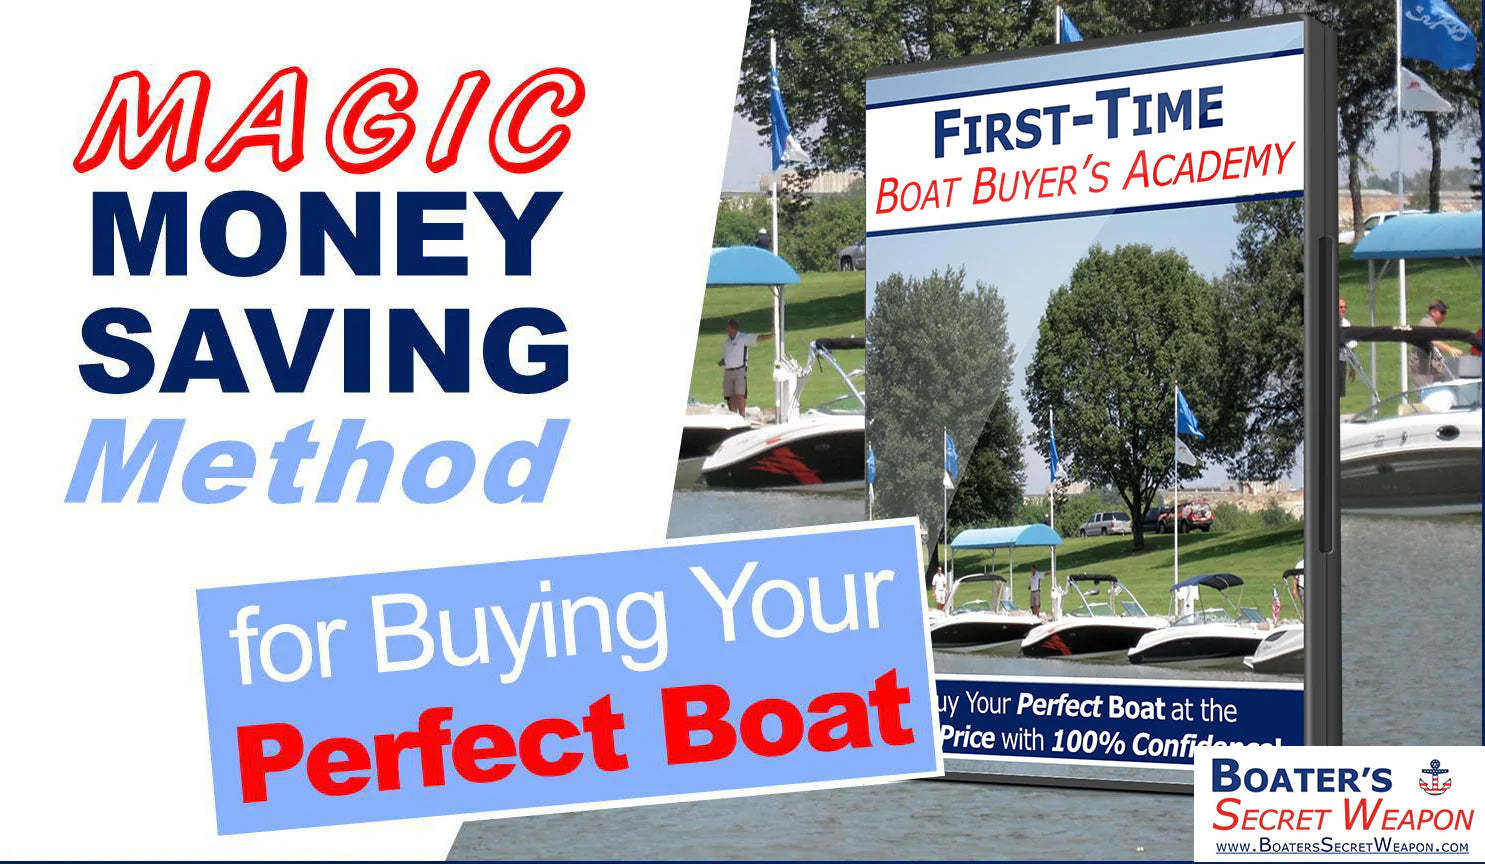 First-Time Boat Buyer's Academy & Magic Money Saving Method $97